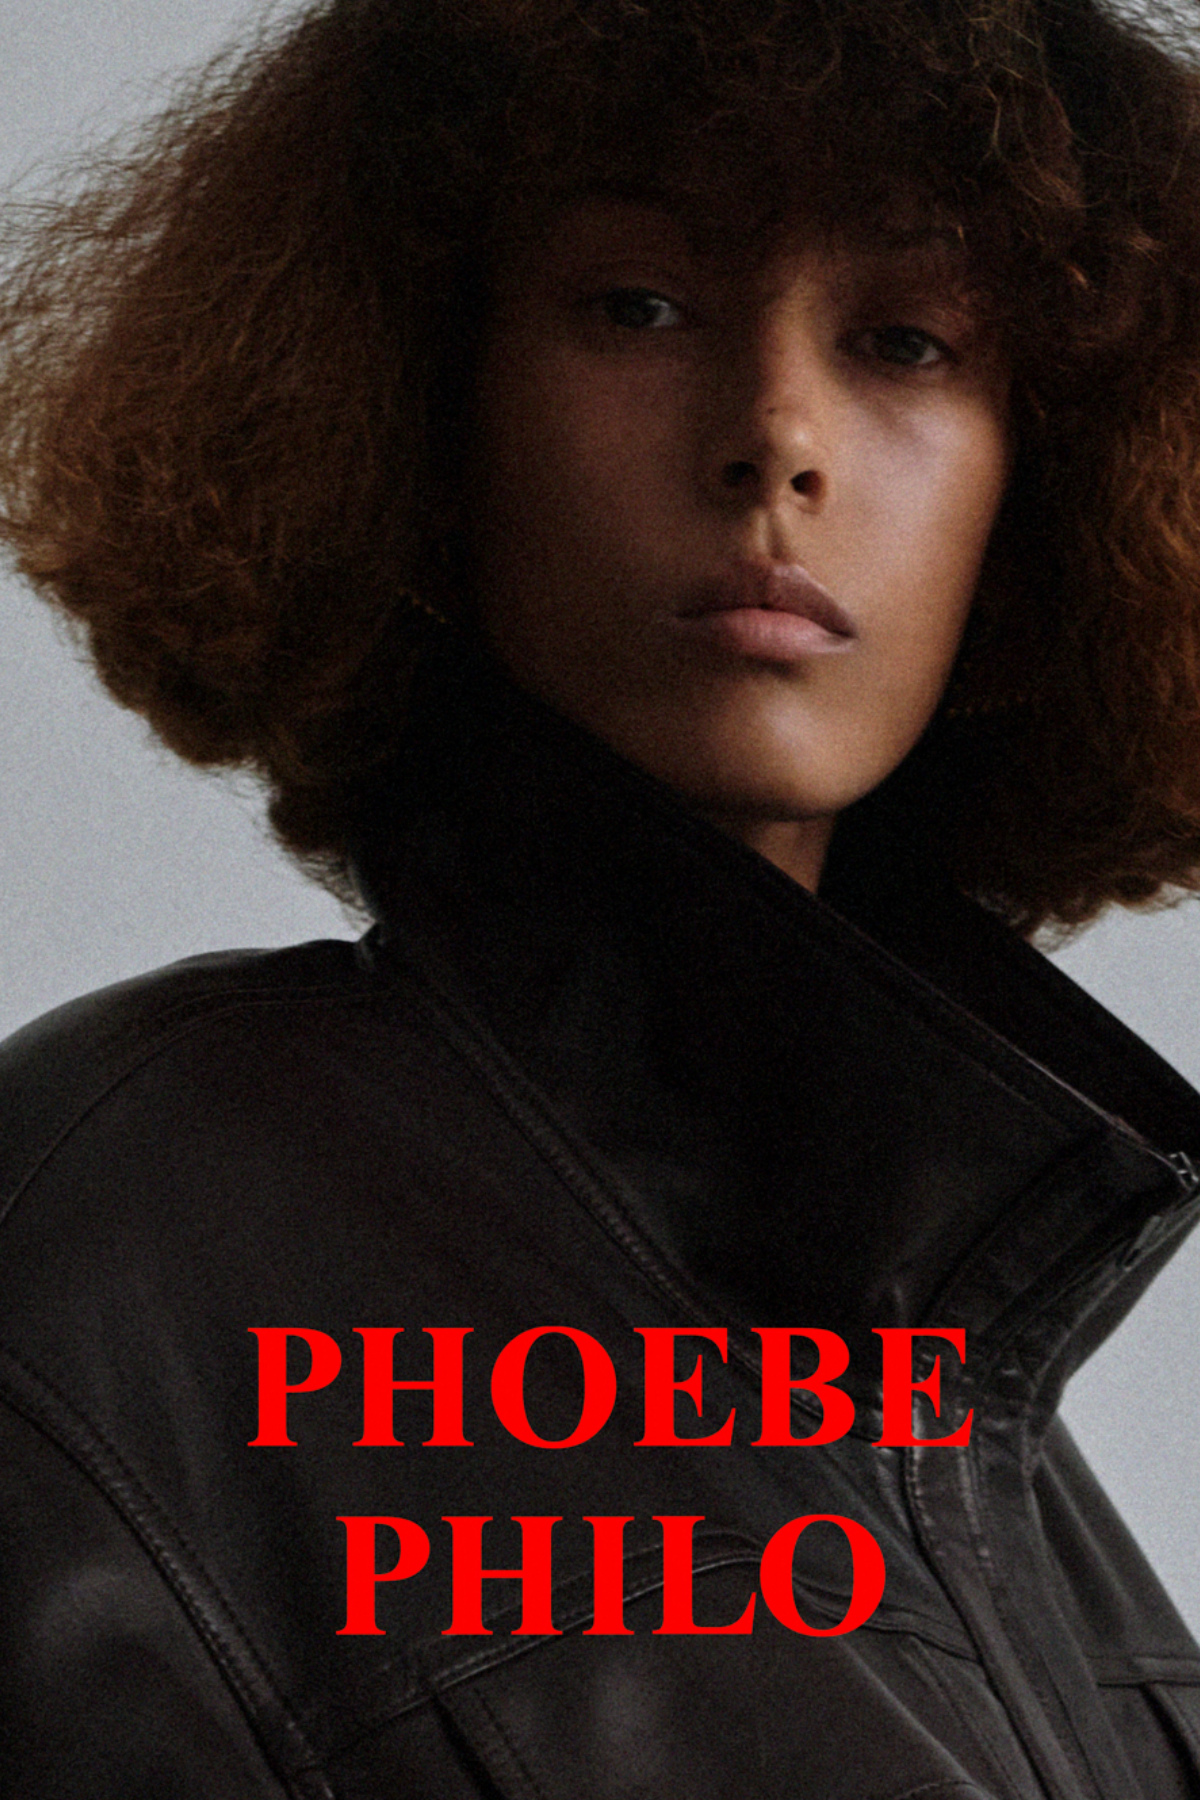 Is Phoebe Philo Fashion's Most Misunderstood Designer?